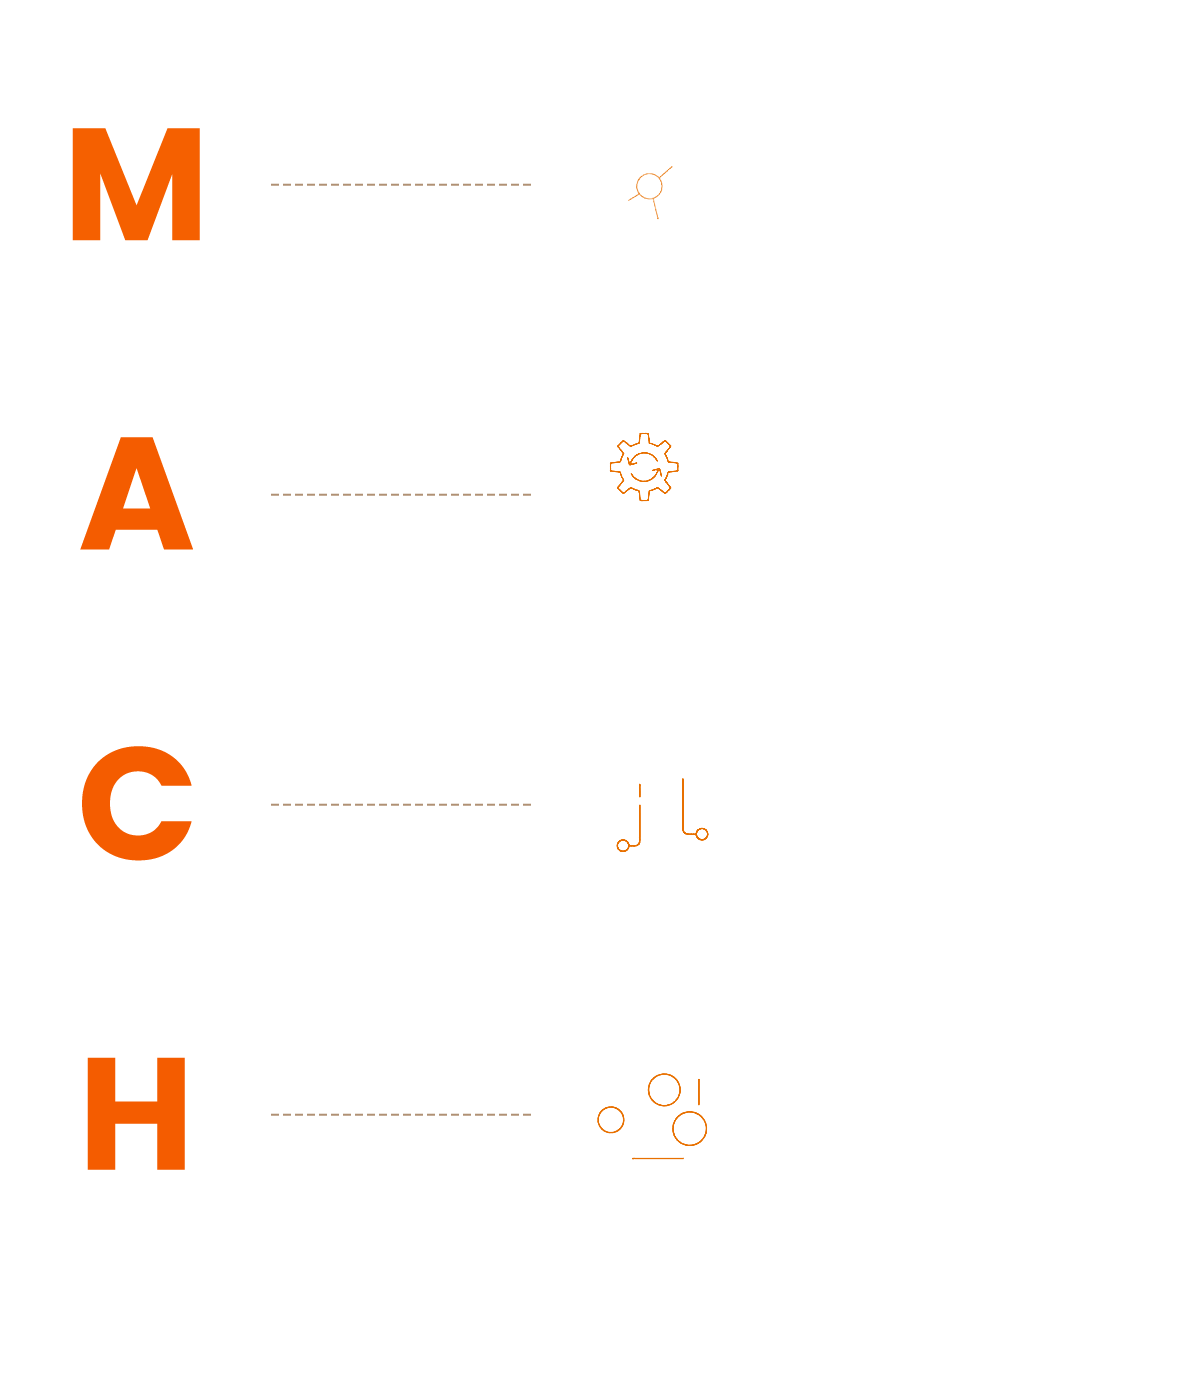 MACH Implementation Process